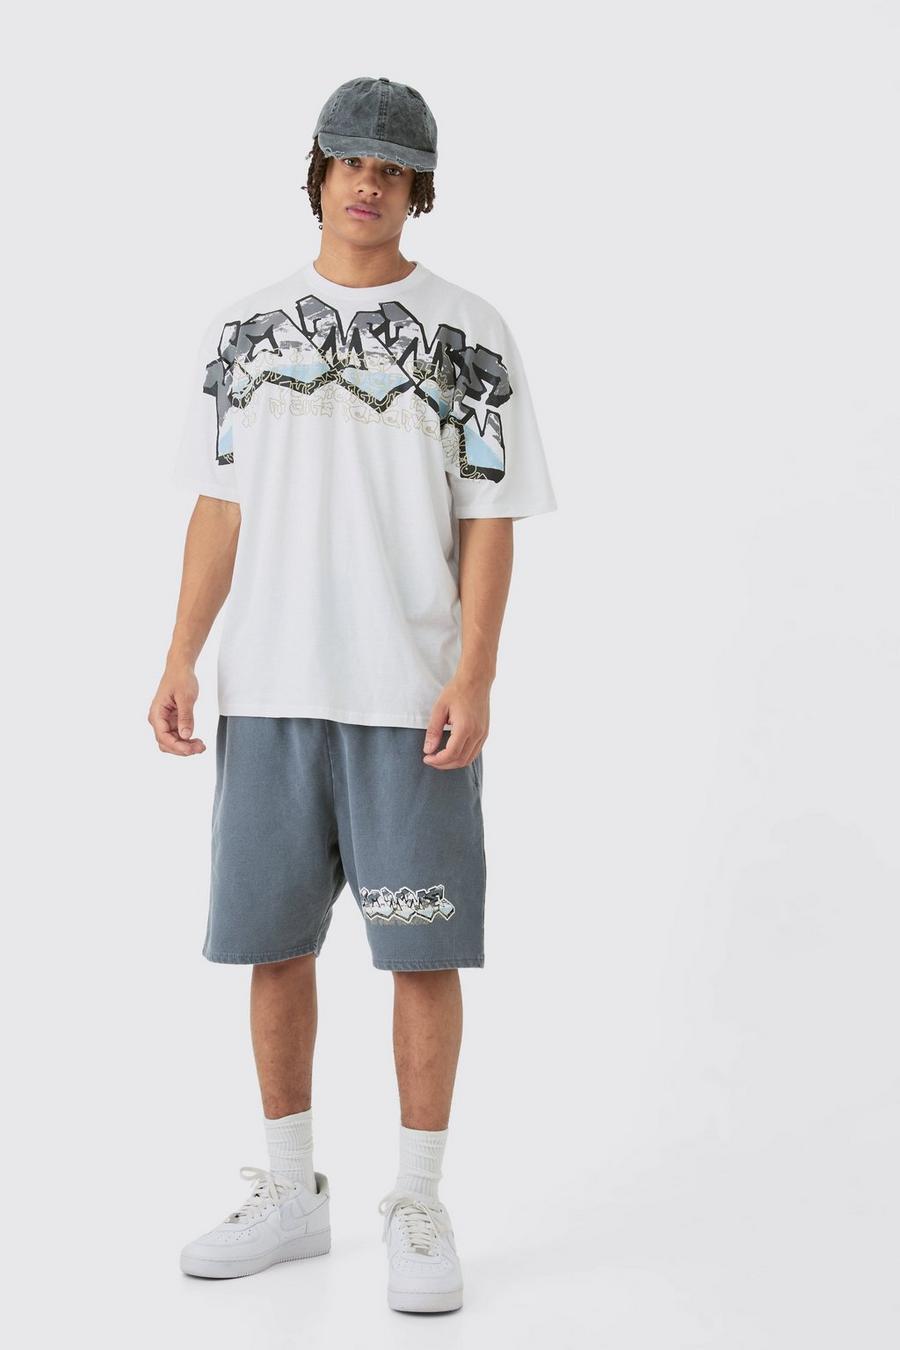 Oversize Shorts-Set mit Homme Graffiti Print, Charcoal